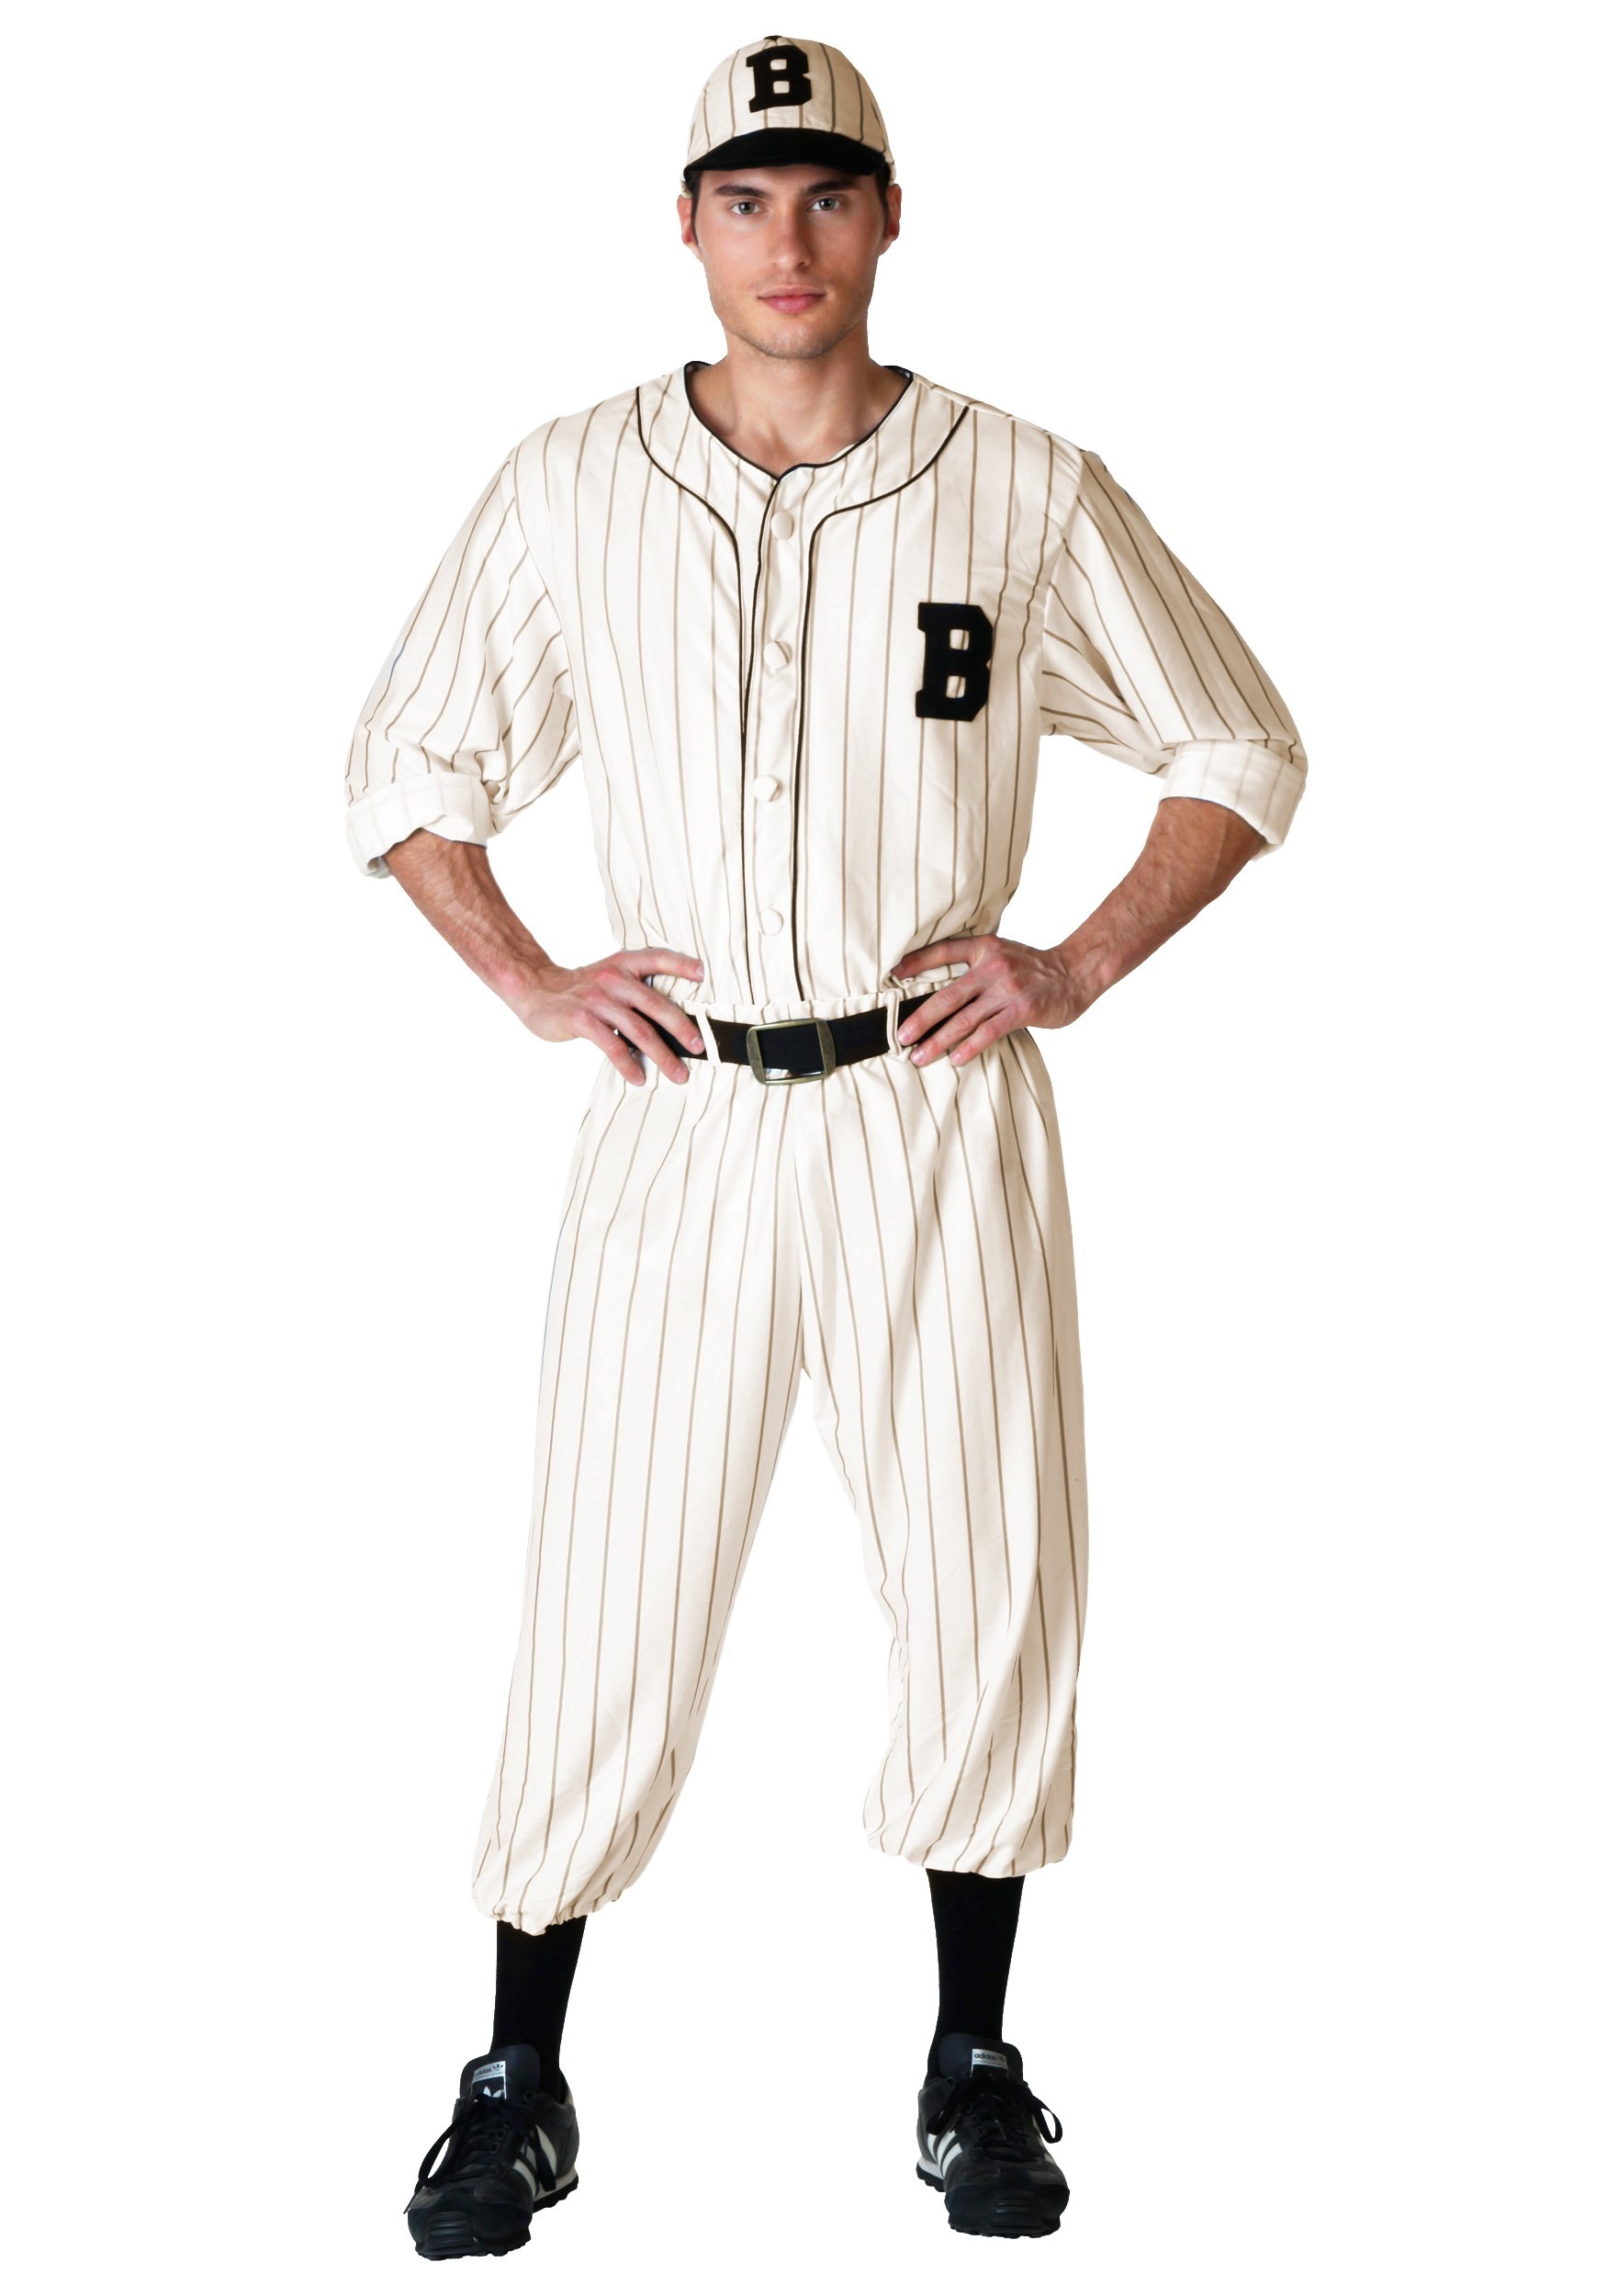 Plus Size Vintage Baseball Player Costume for Men